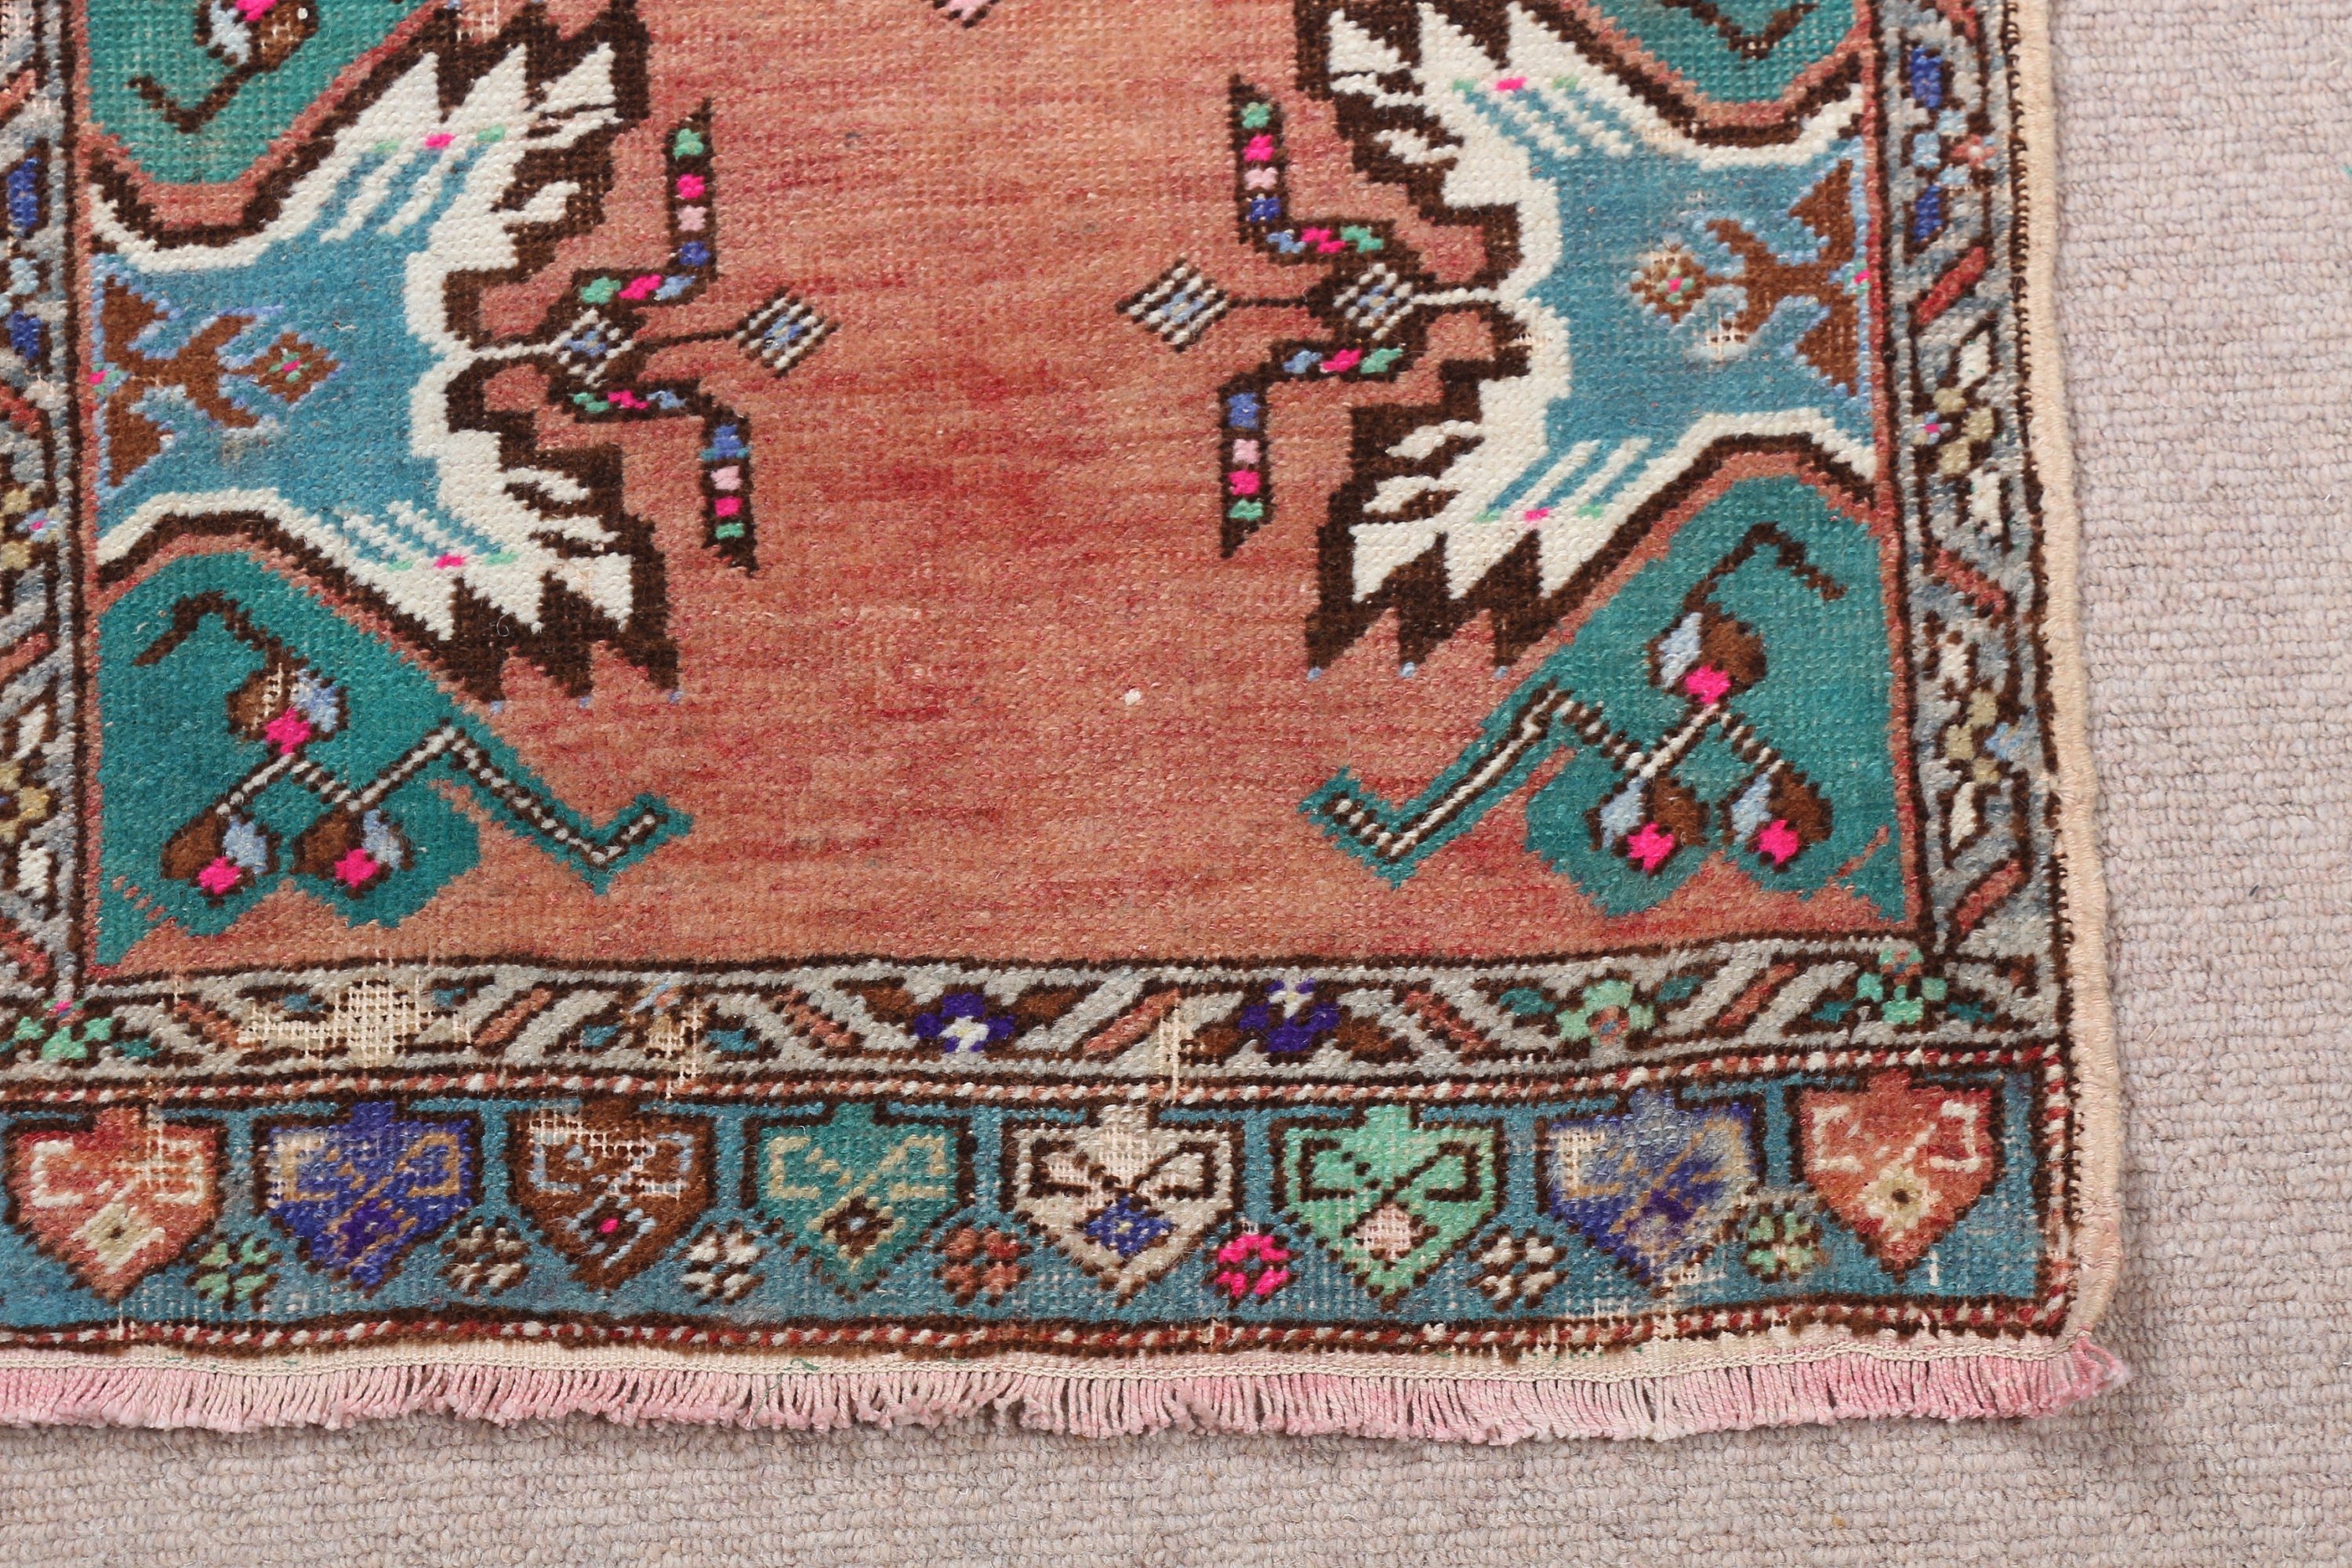 Pink Oushak Rug, Moroccan Rugs, Turkish Rug, Wall Hanging Rug, Floor Rug, Bath Rugs, 1.8x3.4 ft Small Rugs, Rugs for Nursery, Vintage Rug